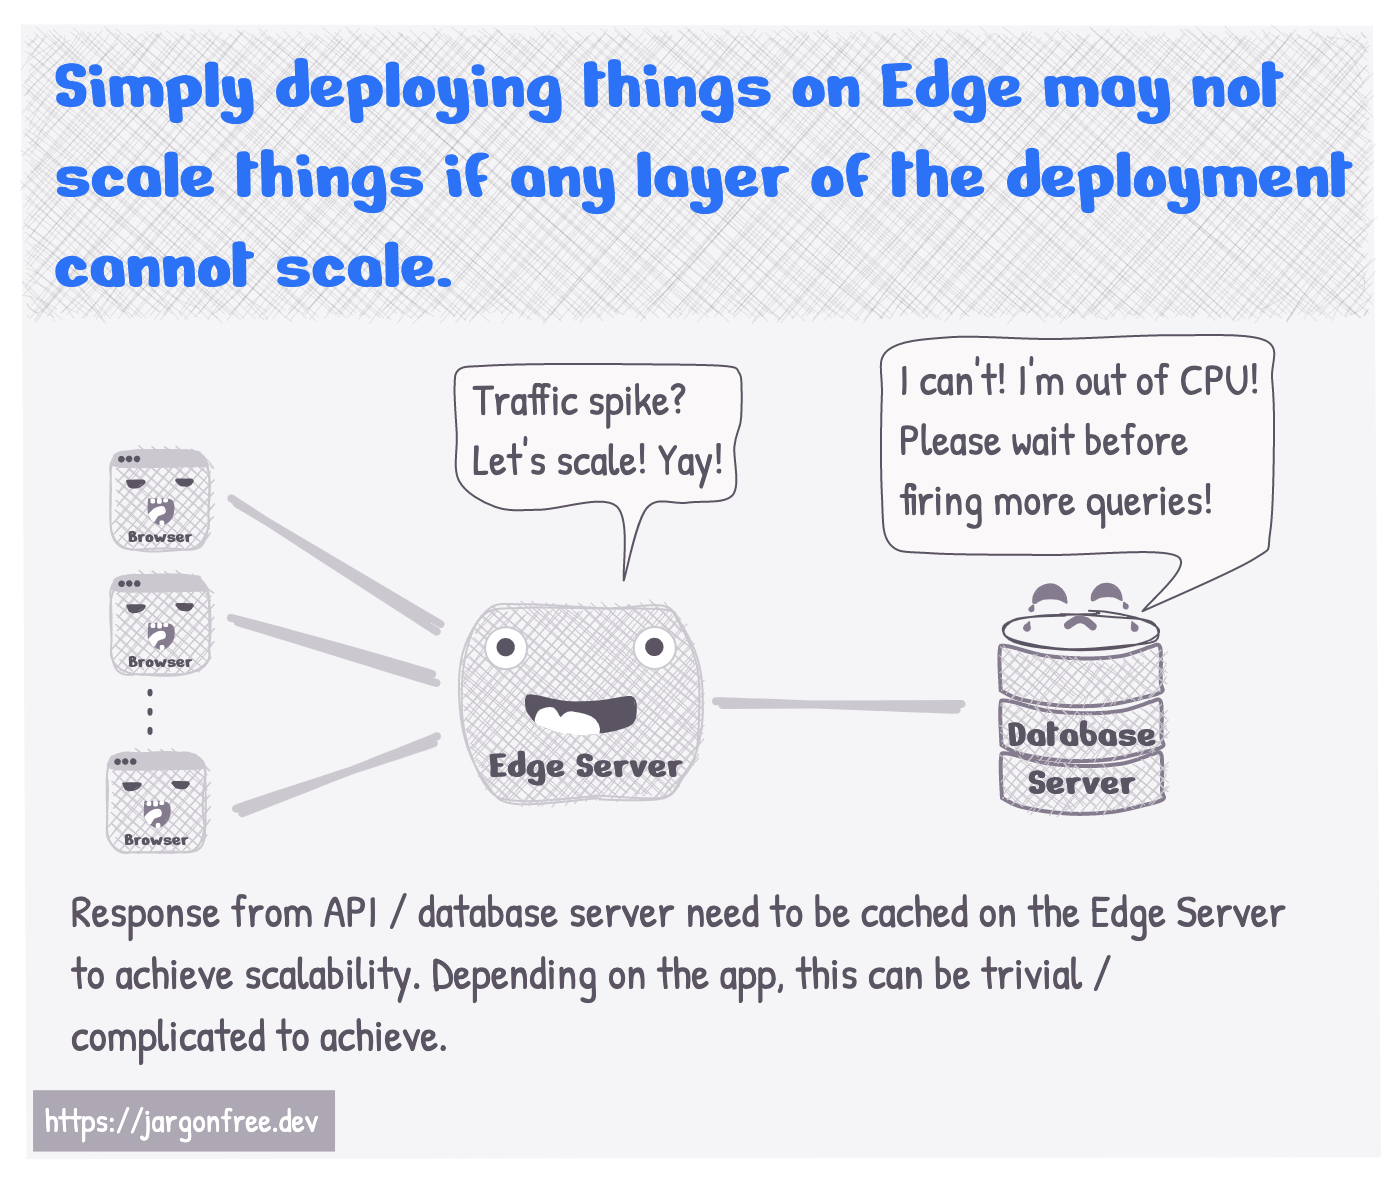 Dockerized node deployments on the cloud enable horizontal scalability